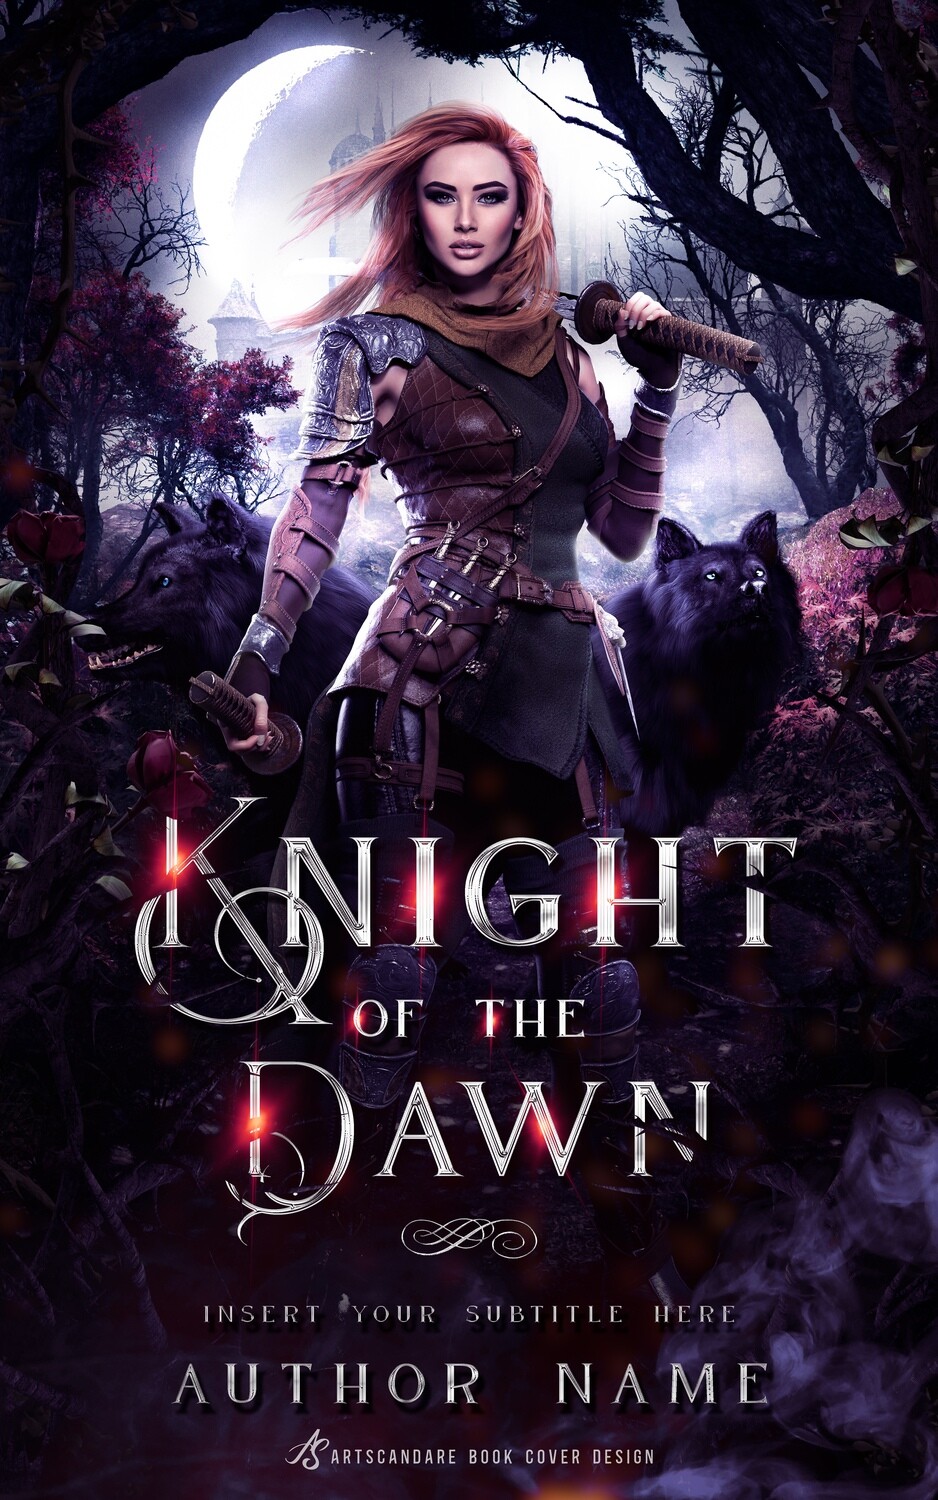 Ebook: Knight of the Dawn